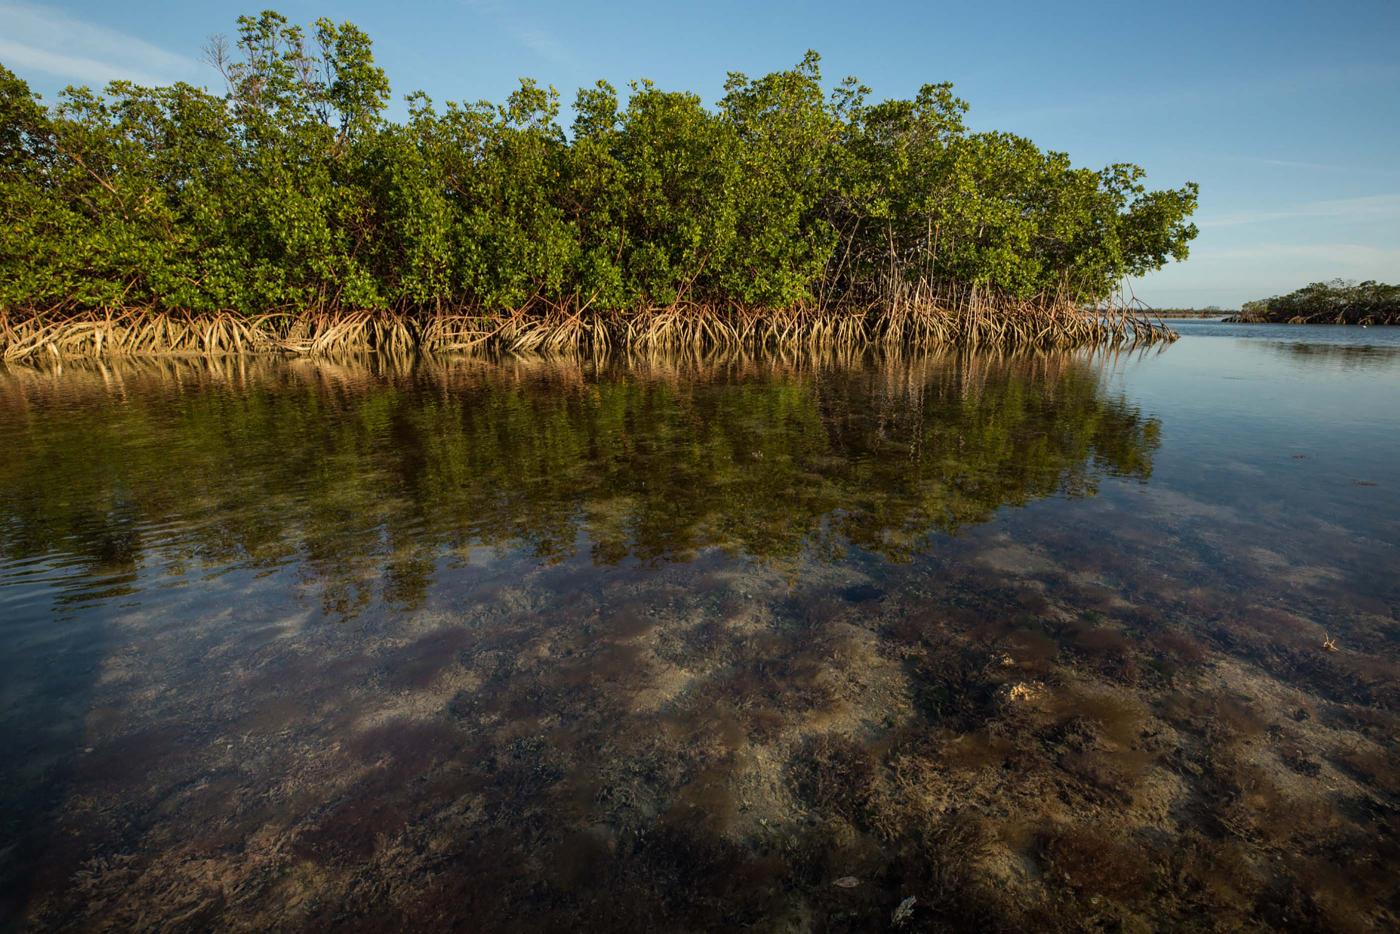 Rotary members plant red mangrove trees | Rotary International